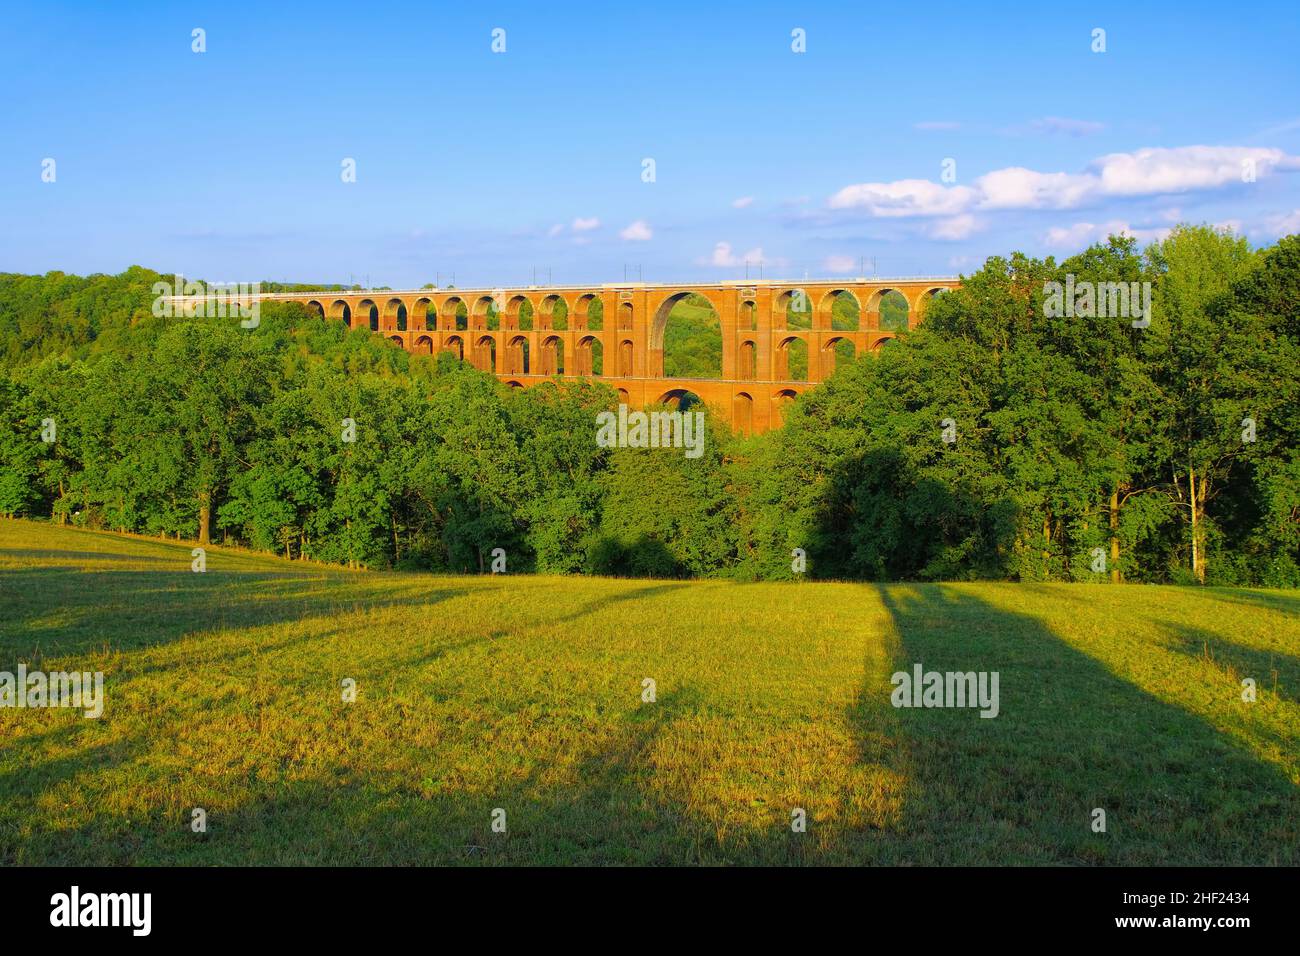 Goeltzsch Viaduct railway bridge in Saxony, Germany - Worlds largest brick bridge Stock Photo